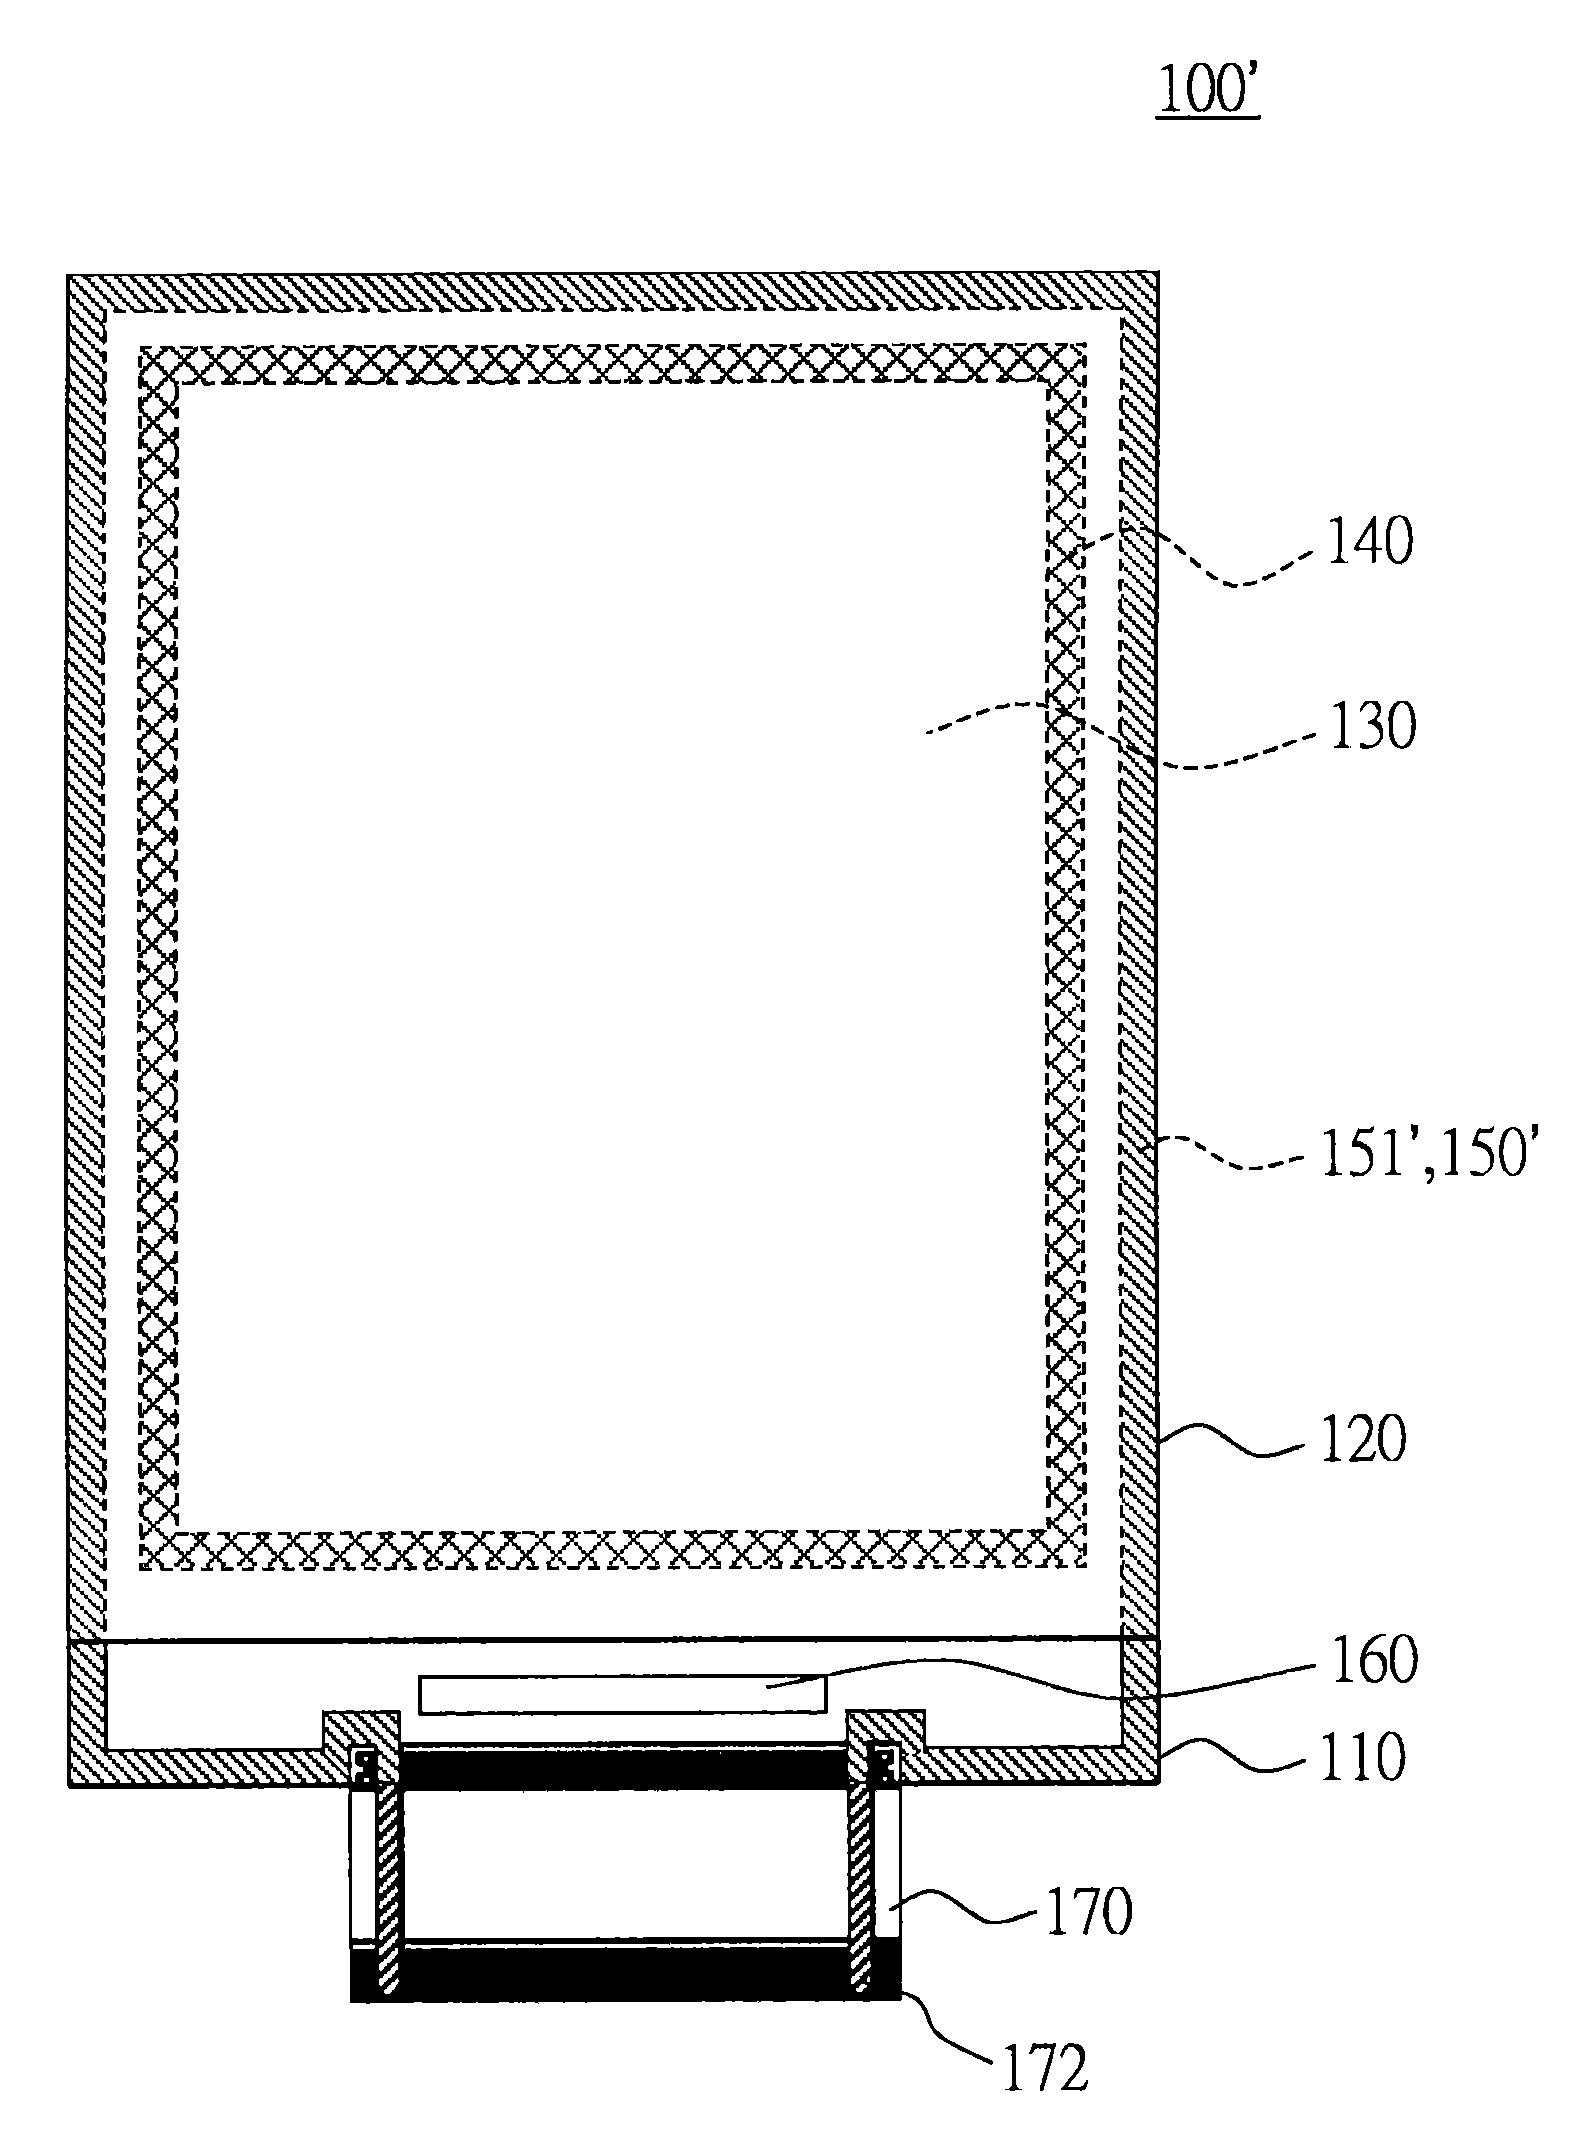 Liquid crystal display panel